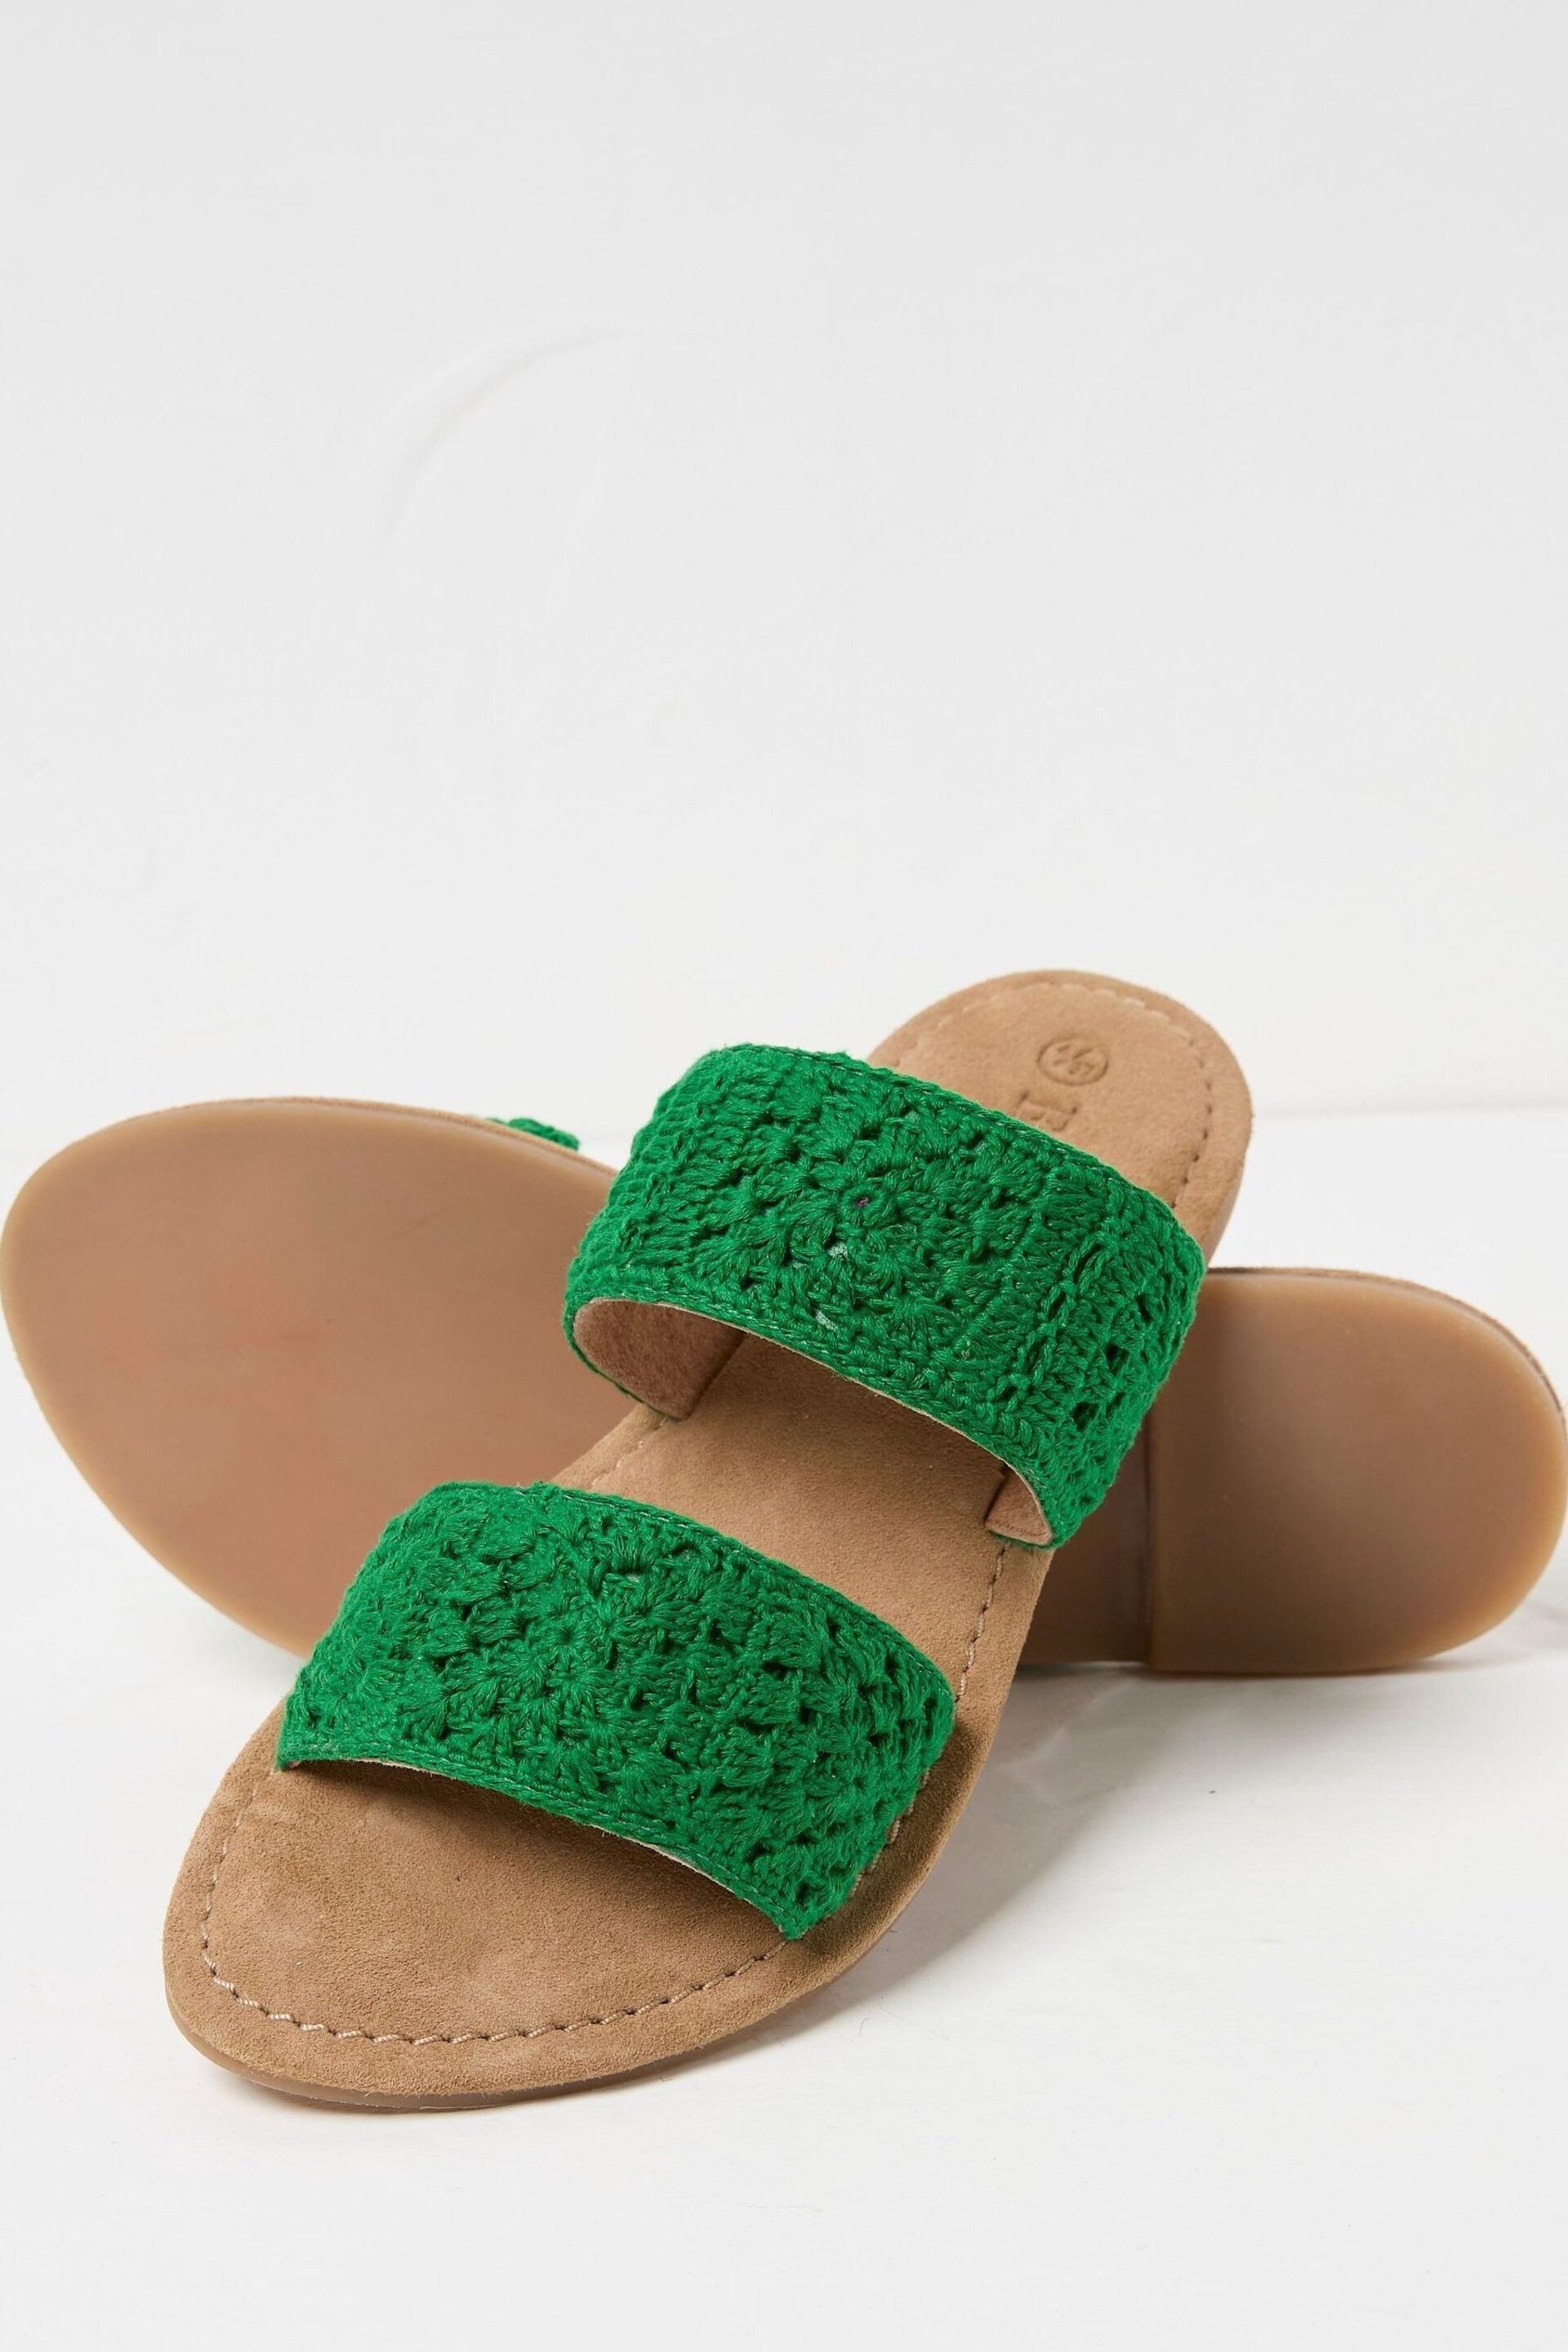 FatFace Green Crochet Sliders - Image 2 of 3